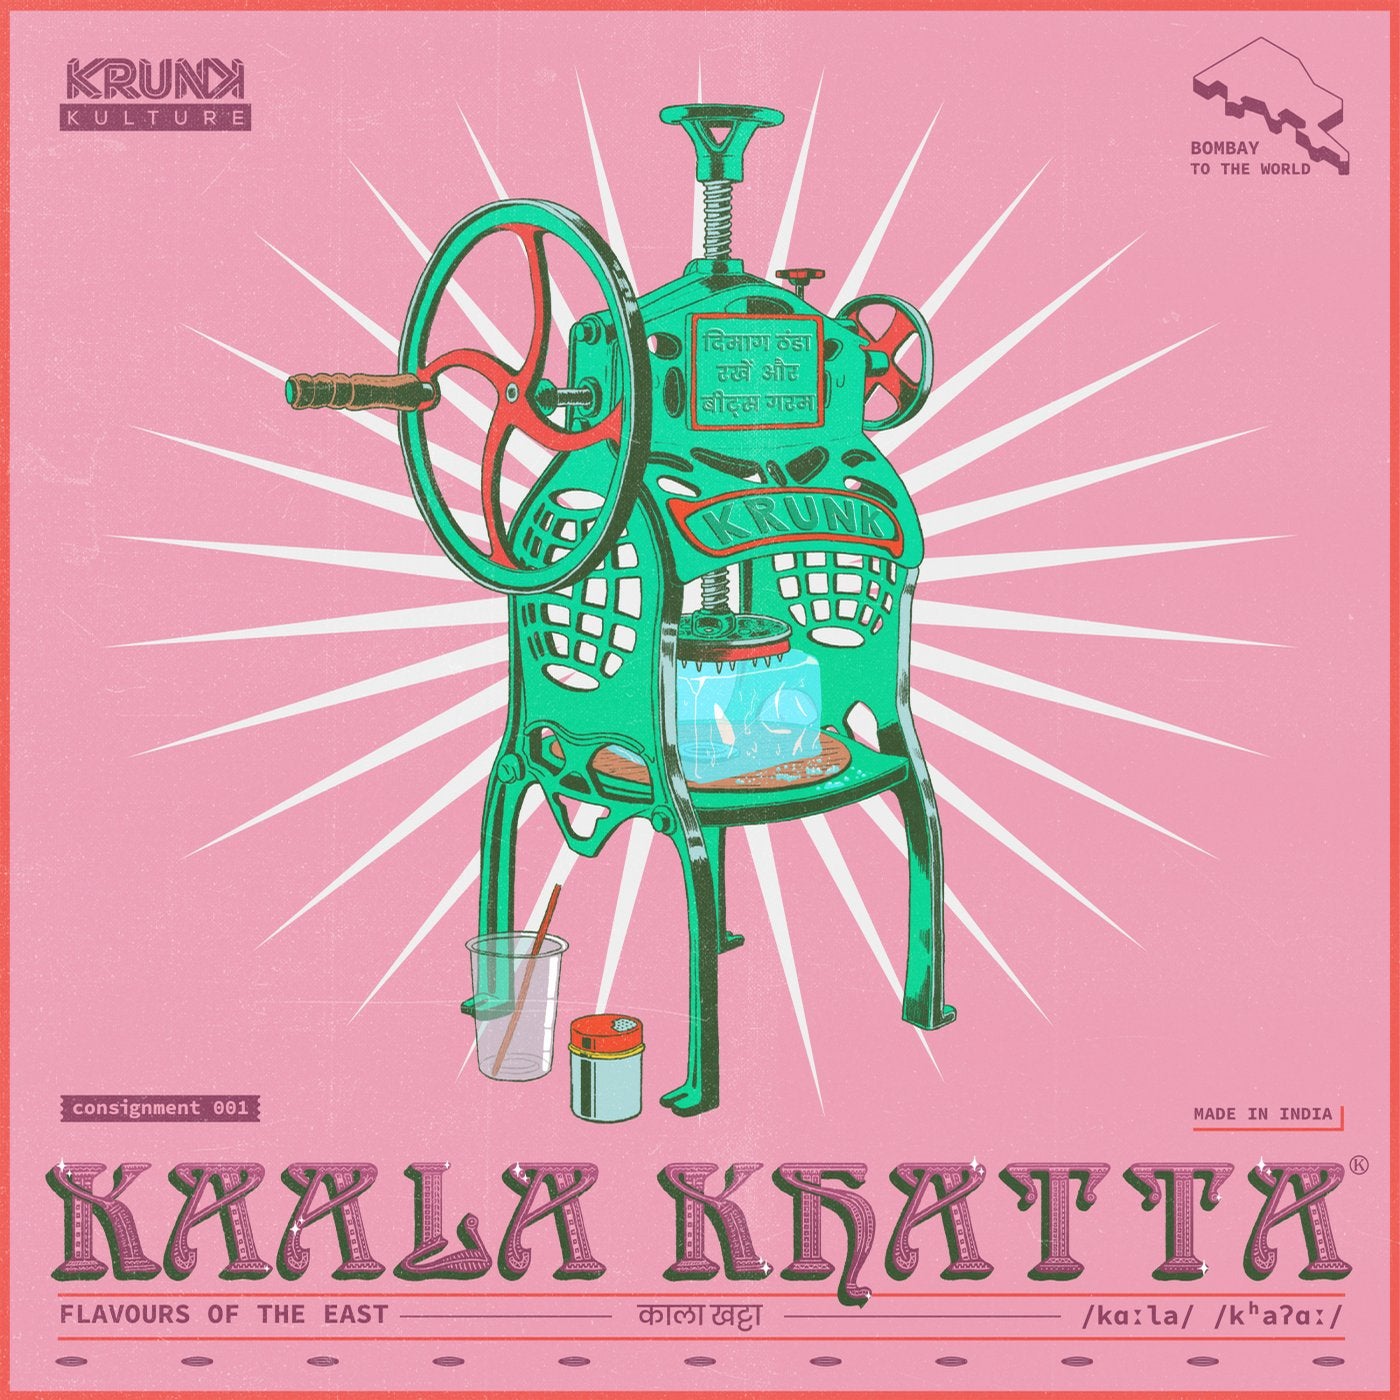 Kaala Khatta - Flavours of the East